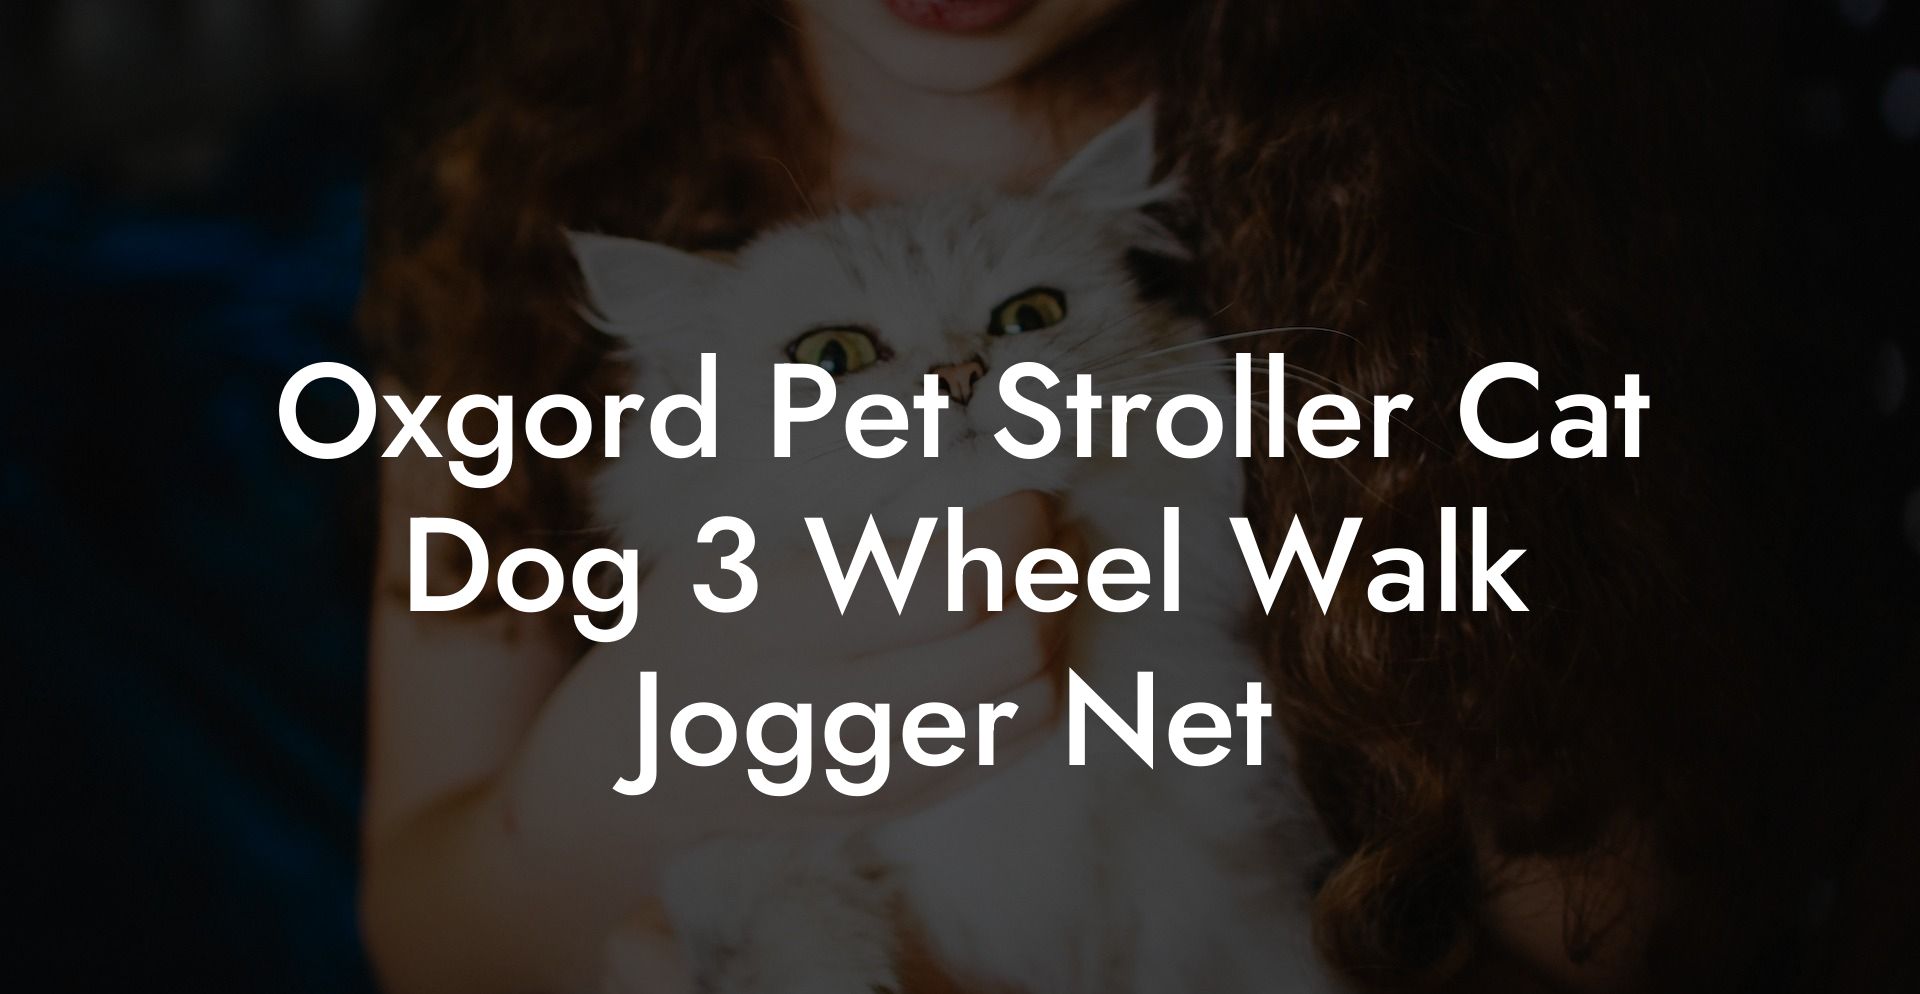 Oxgord Pet Stroller Cat Dog 3 Wheel Walk Jogger Net